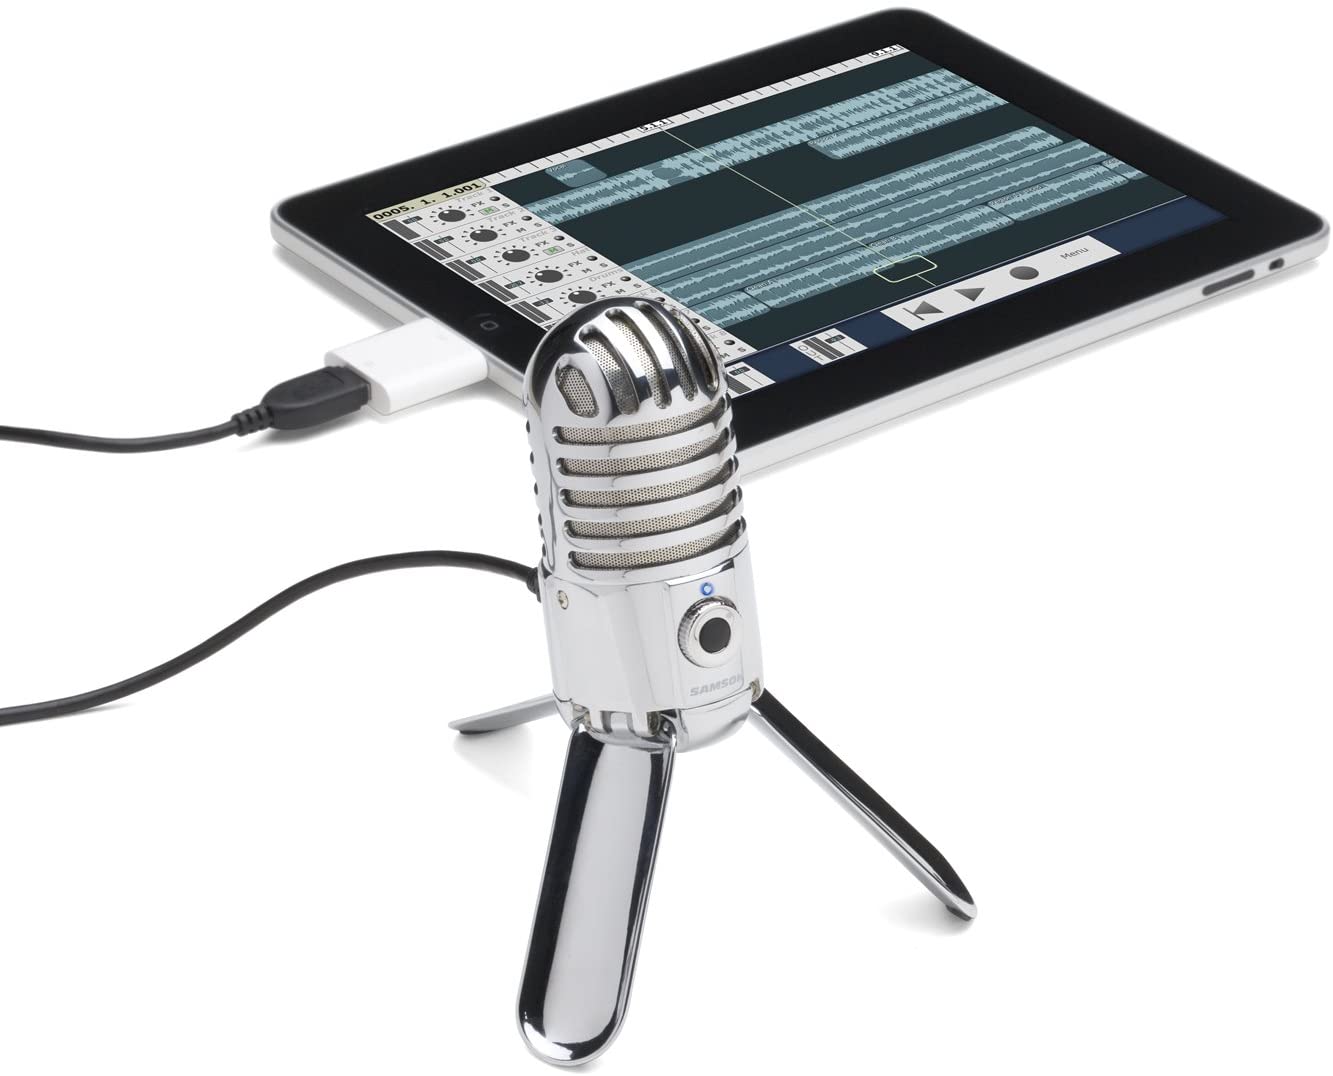 Samson Meteor Mic USB Studio Condenser Microphone Video Livestream Podcasting (Silver and Black)